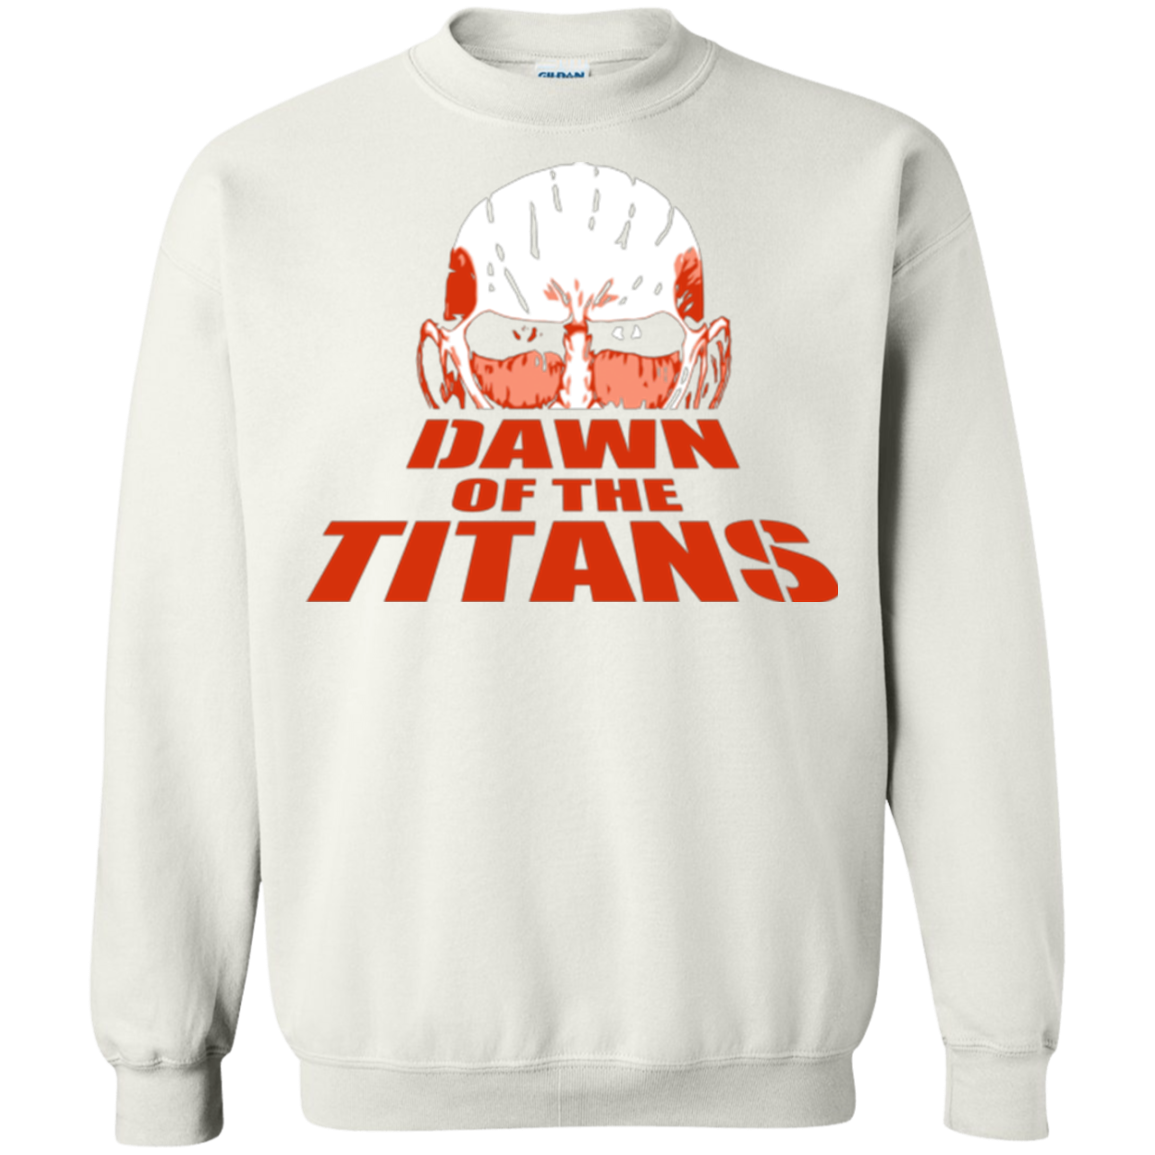 Dawn of the Titans Crewneck Sweatshirt